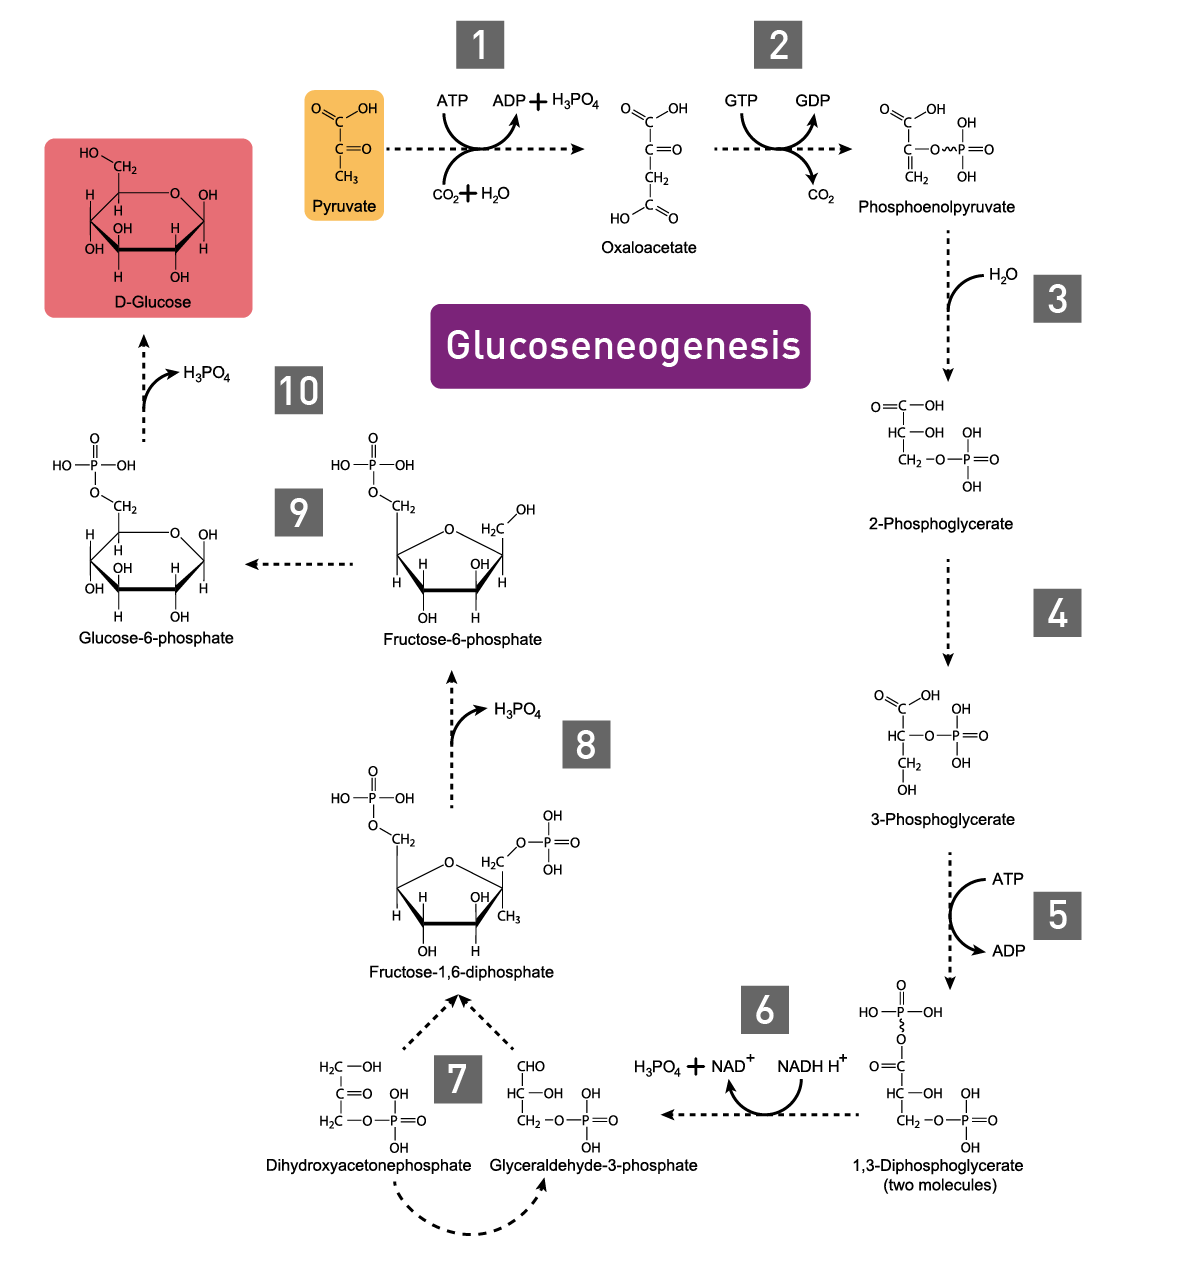 Fig. 3: the gluconeogenesis metabolic pathway